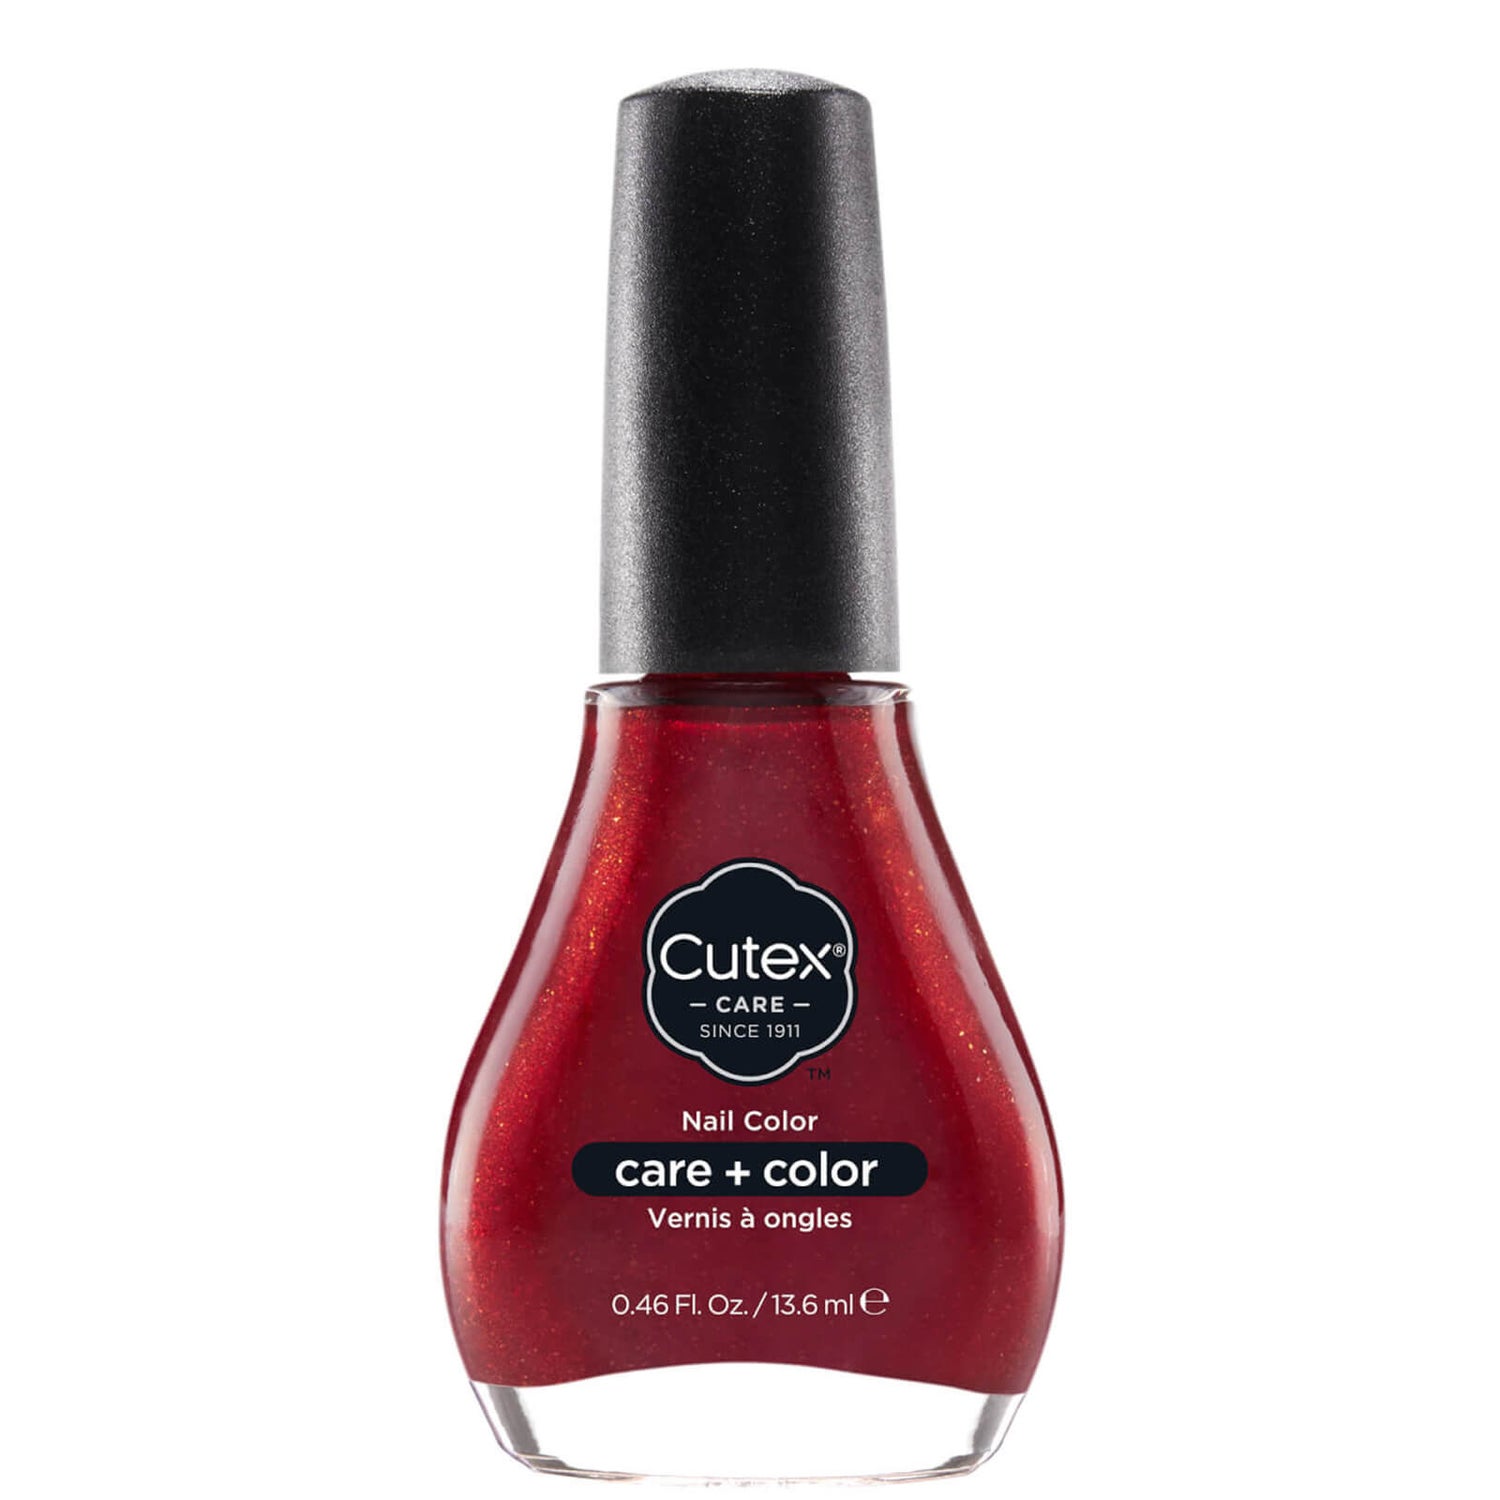 Cutex Care + Color Nail Polish - Fiery Temper 200